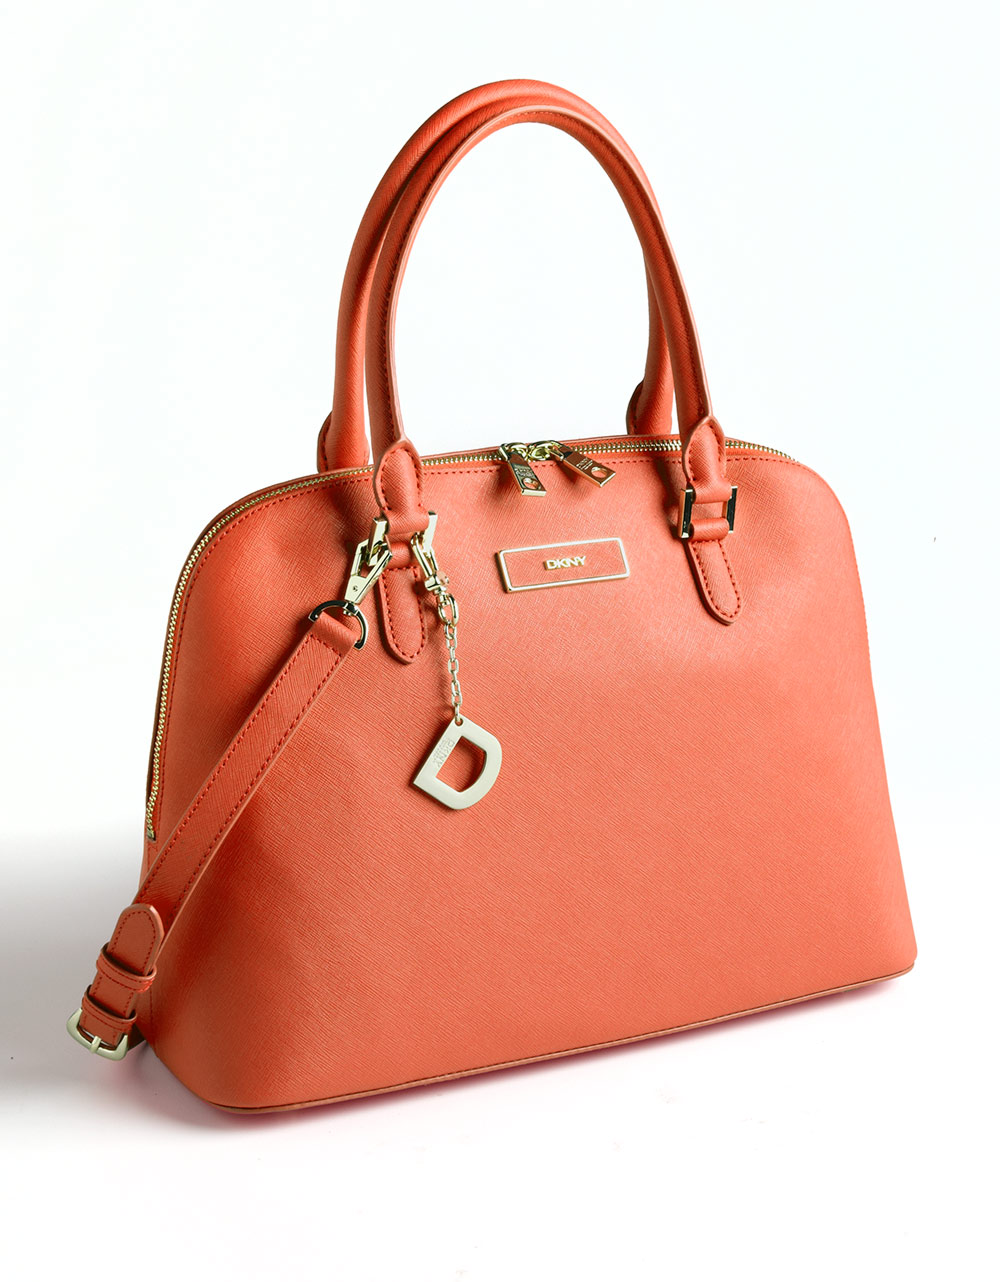 DKNY Saffiano Leather Satchel Bag in Orange - Lyst